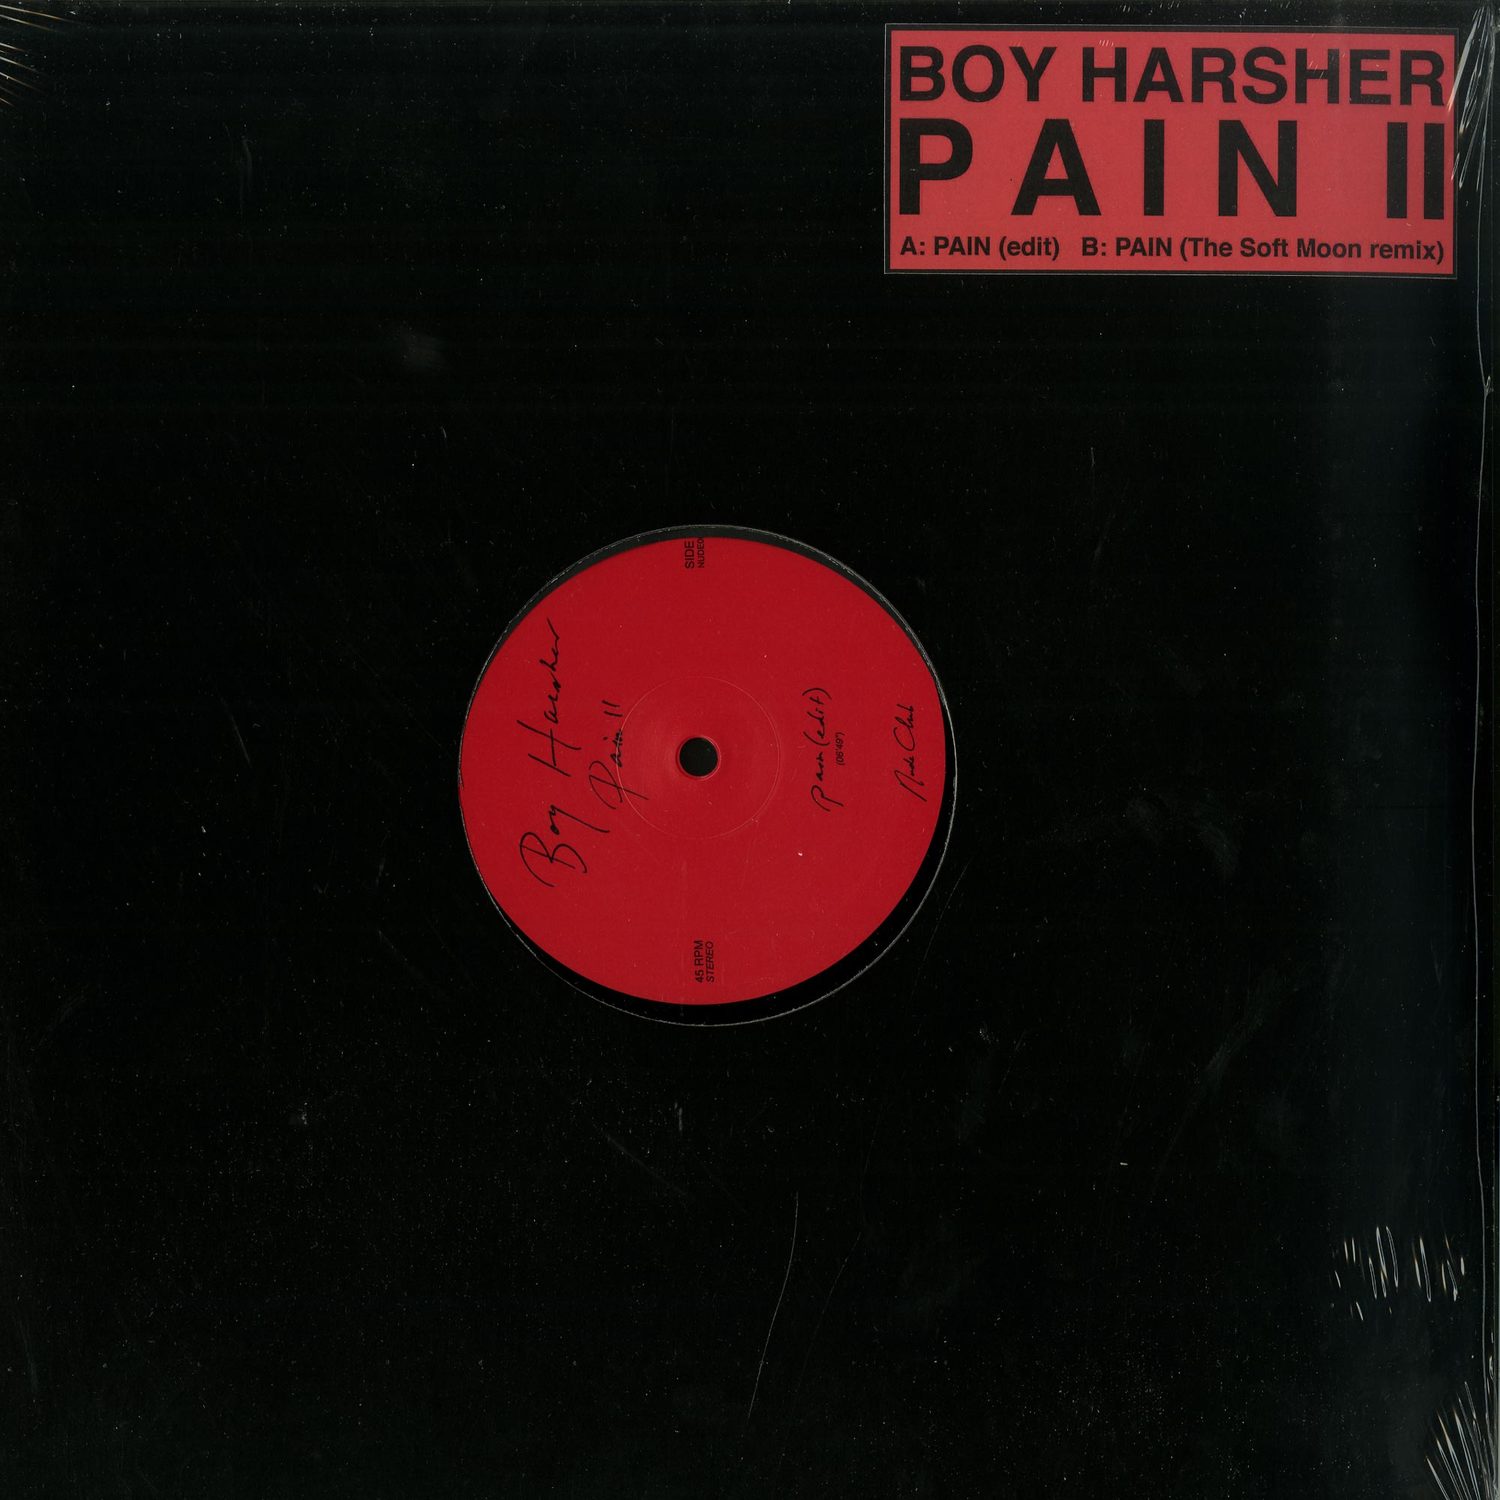 Boy Harsher - PAIN II